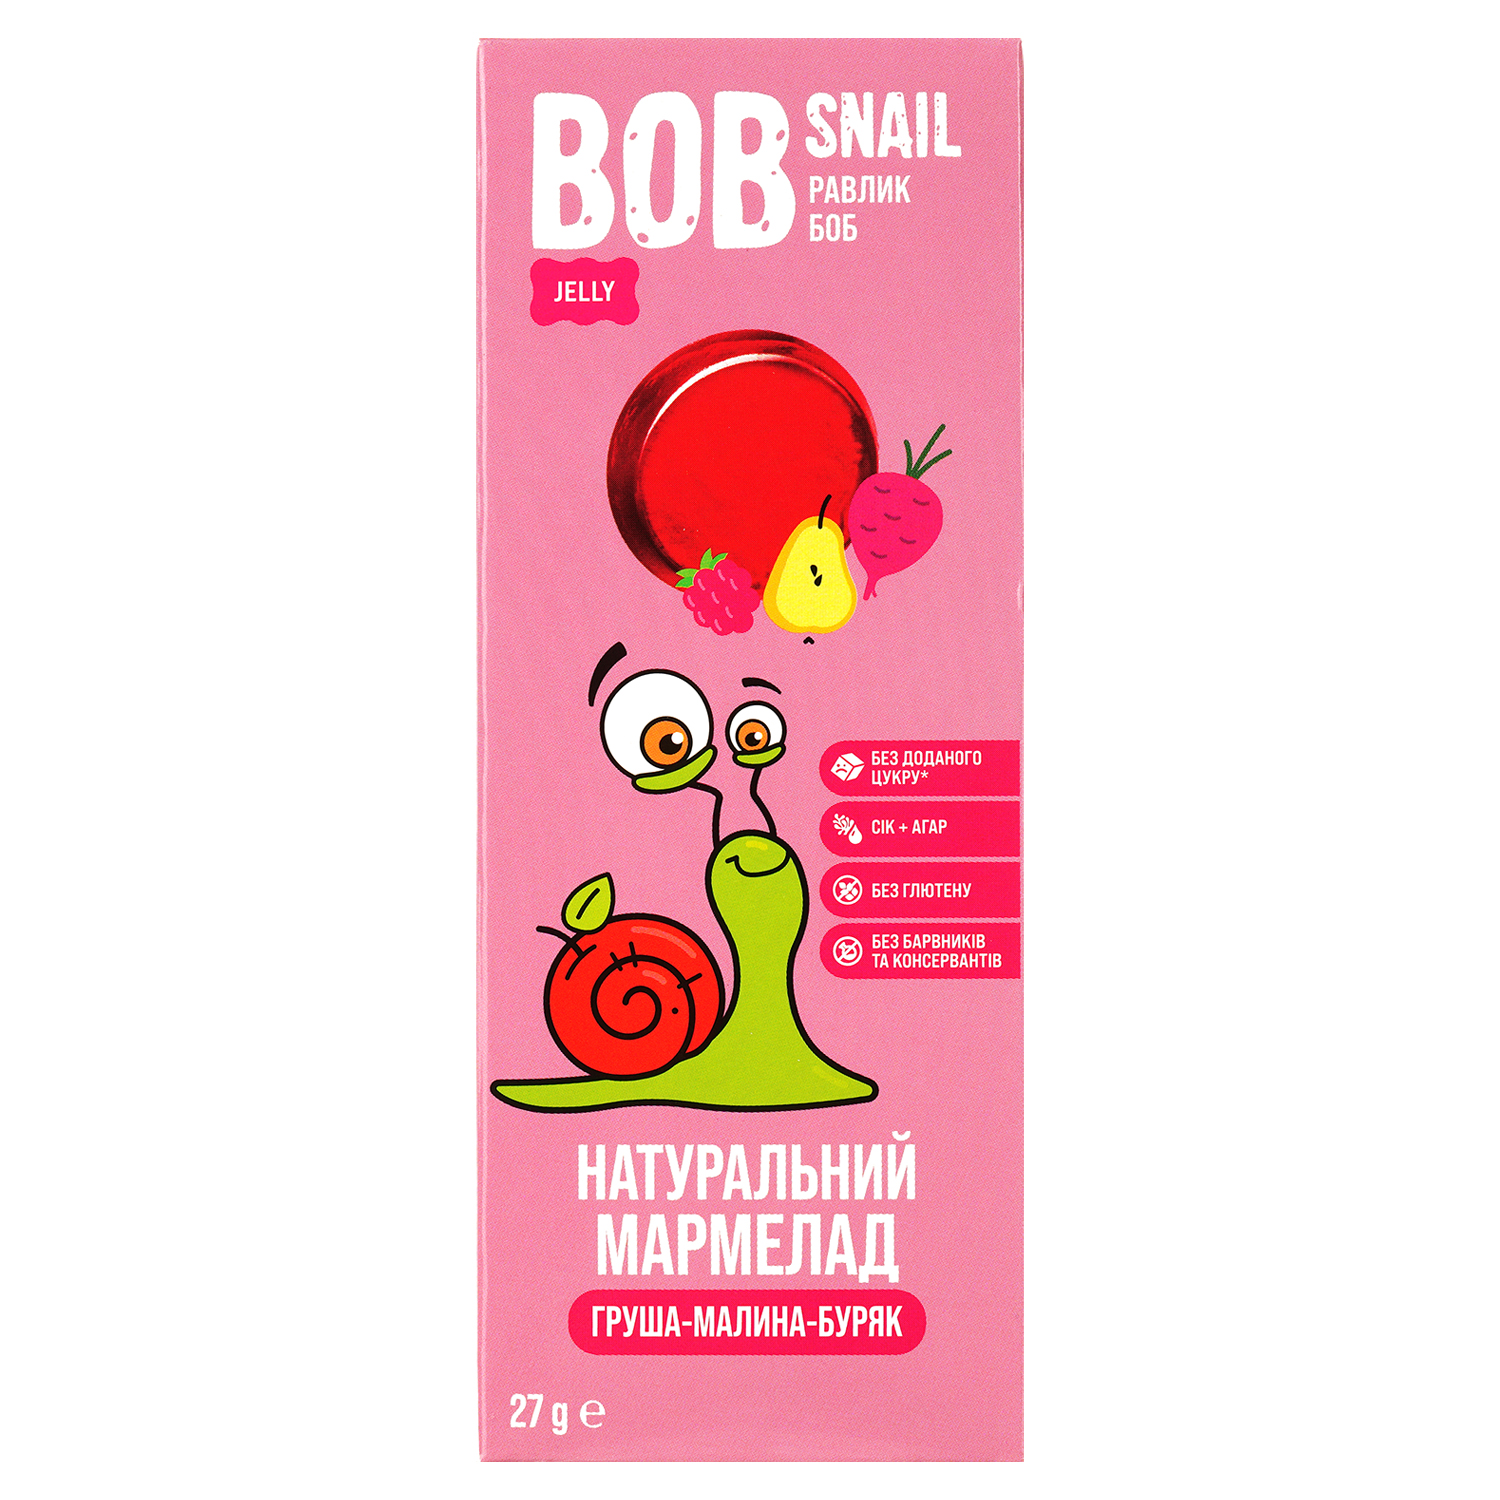 Фруктово-ягодно-овощной мармелад Bob Snail Груша-Малина-Свекла 27 г - фото 1